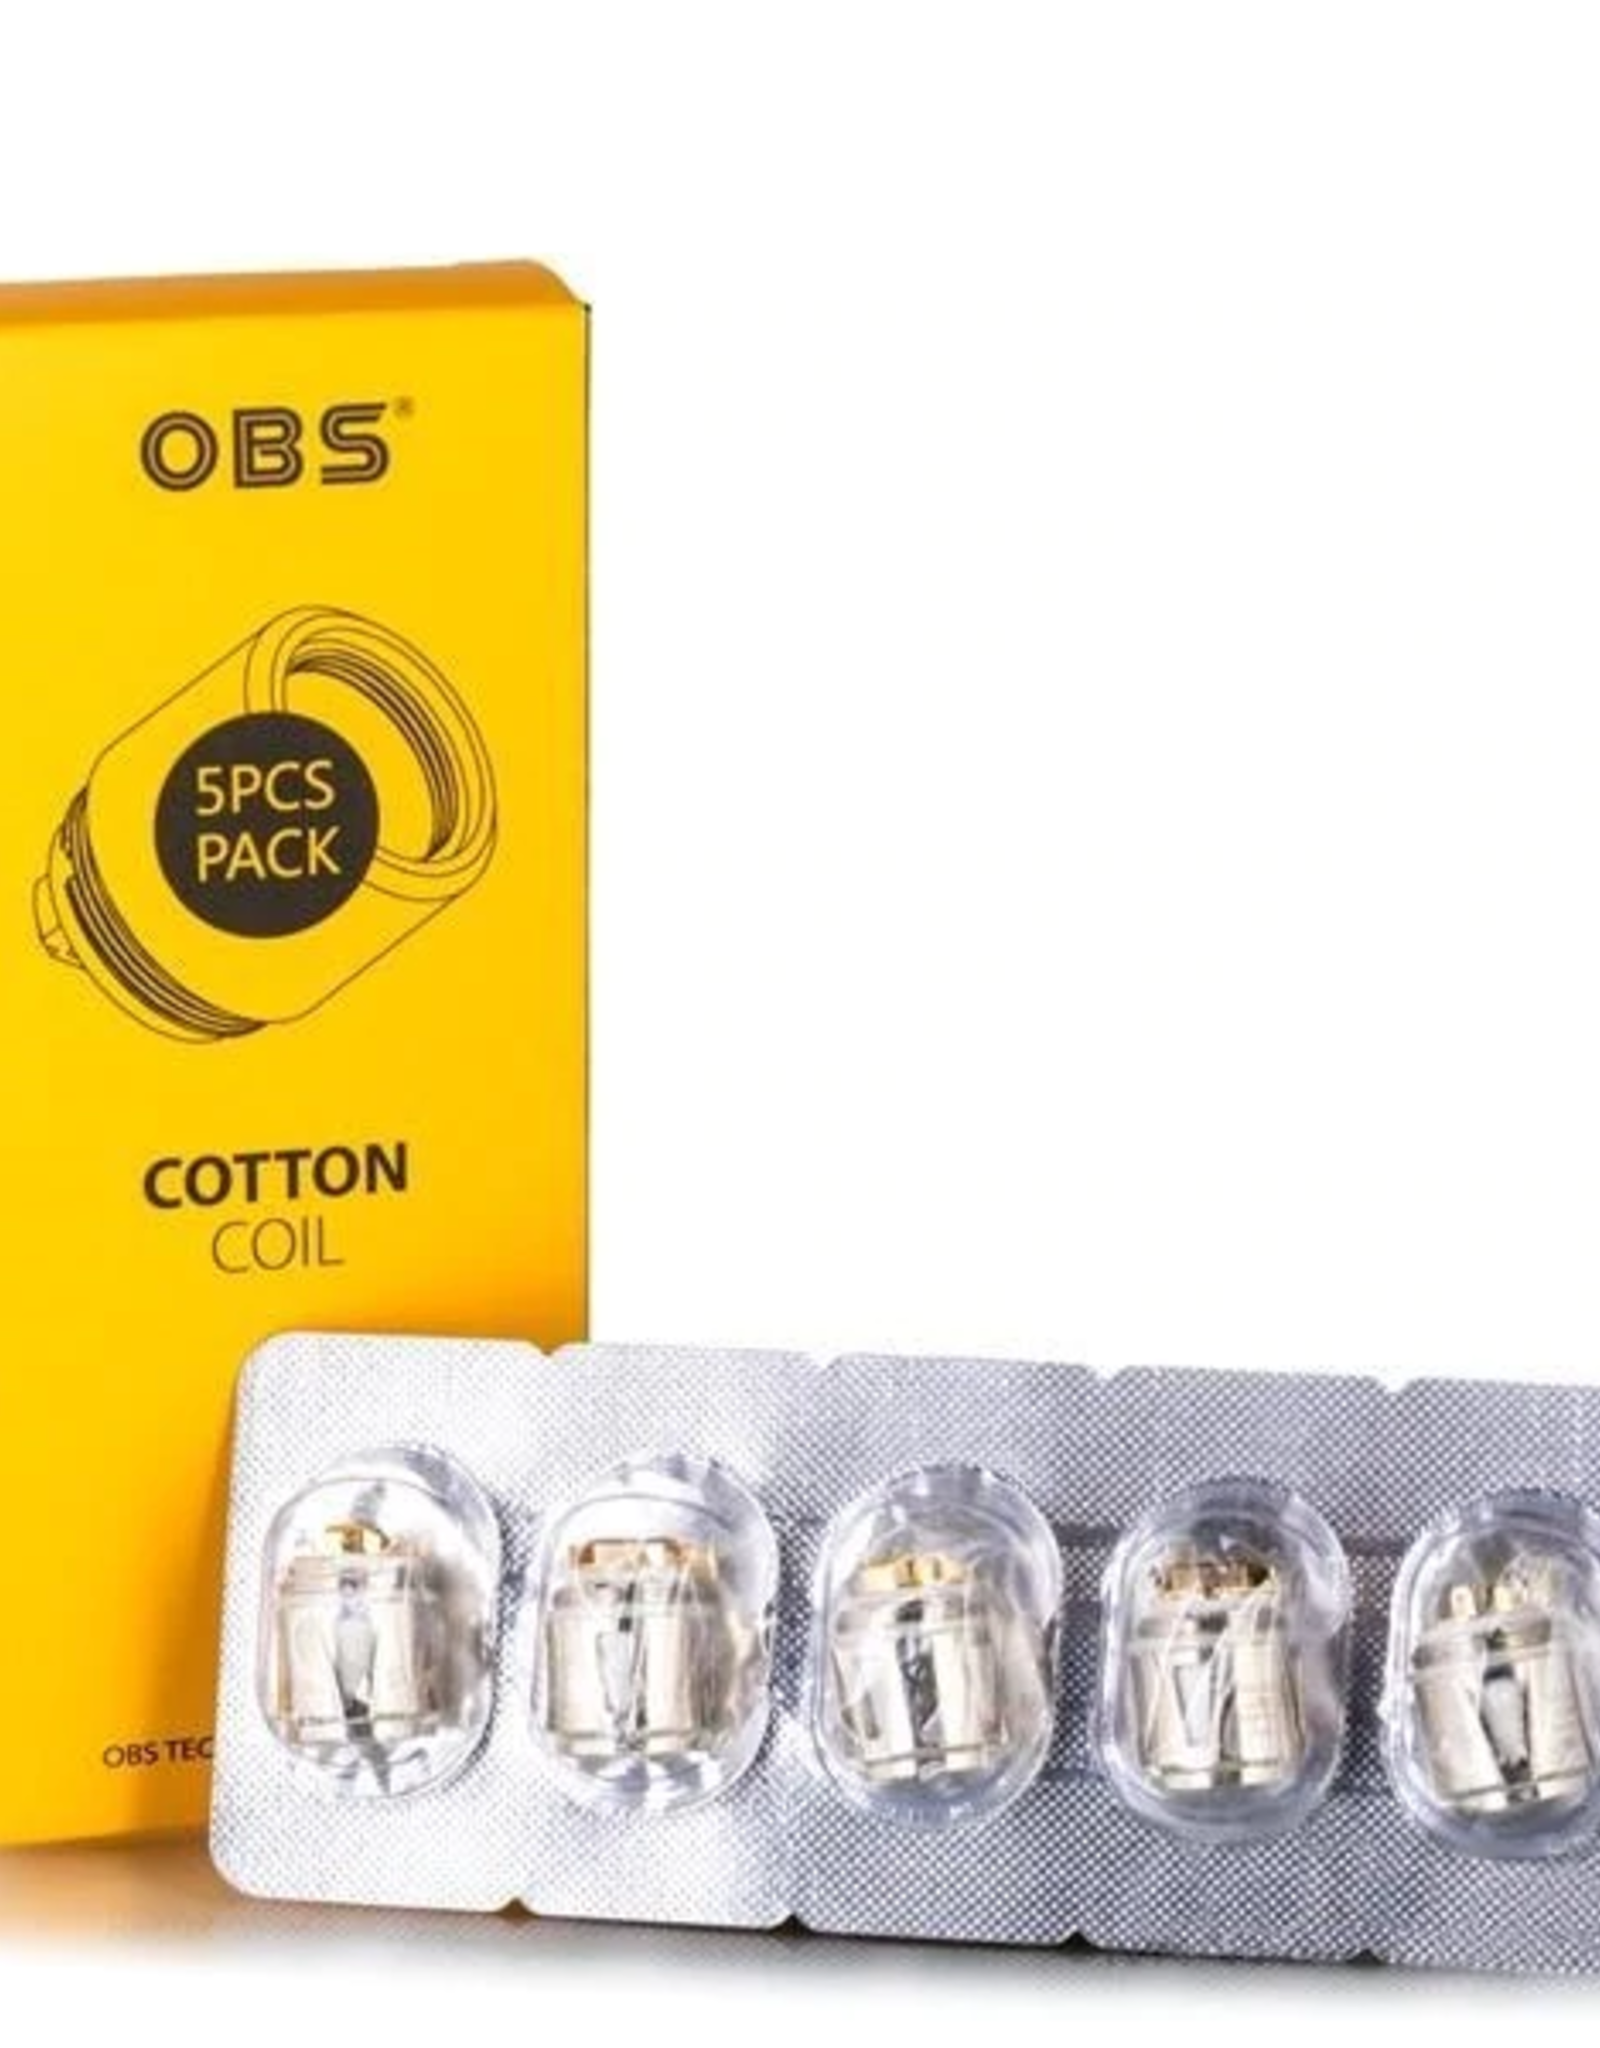 OBS OBS Cube Mini Coils